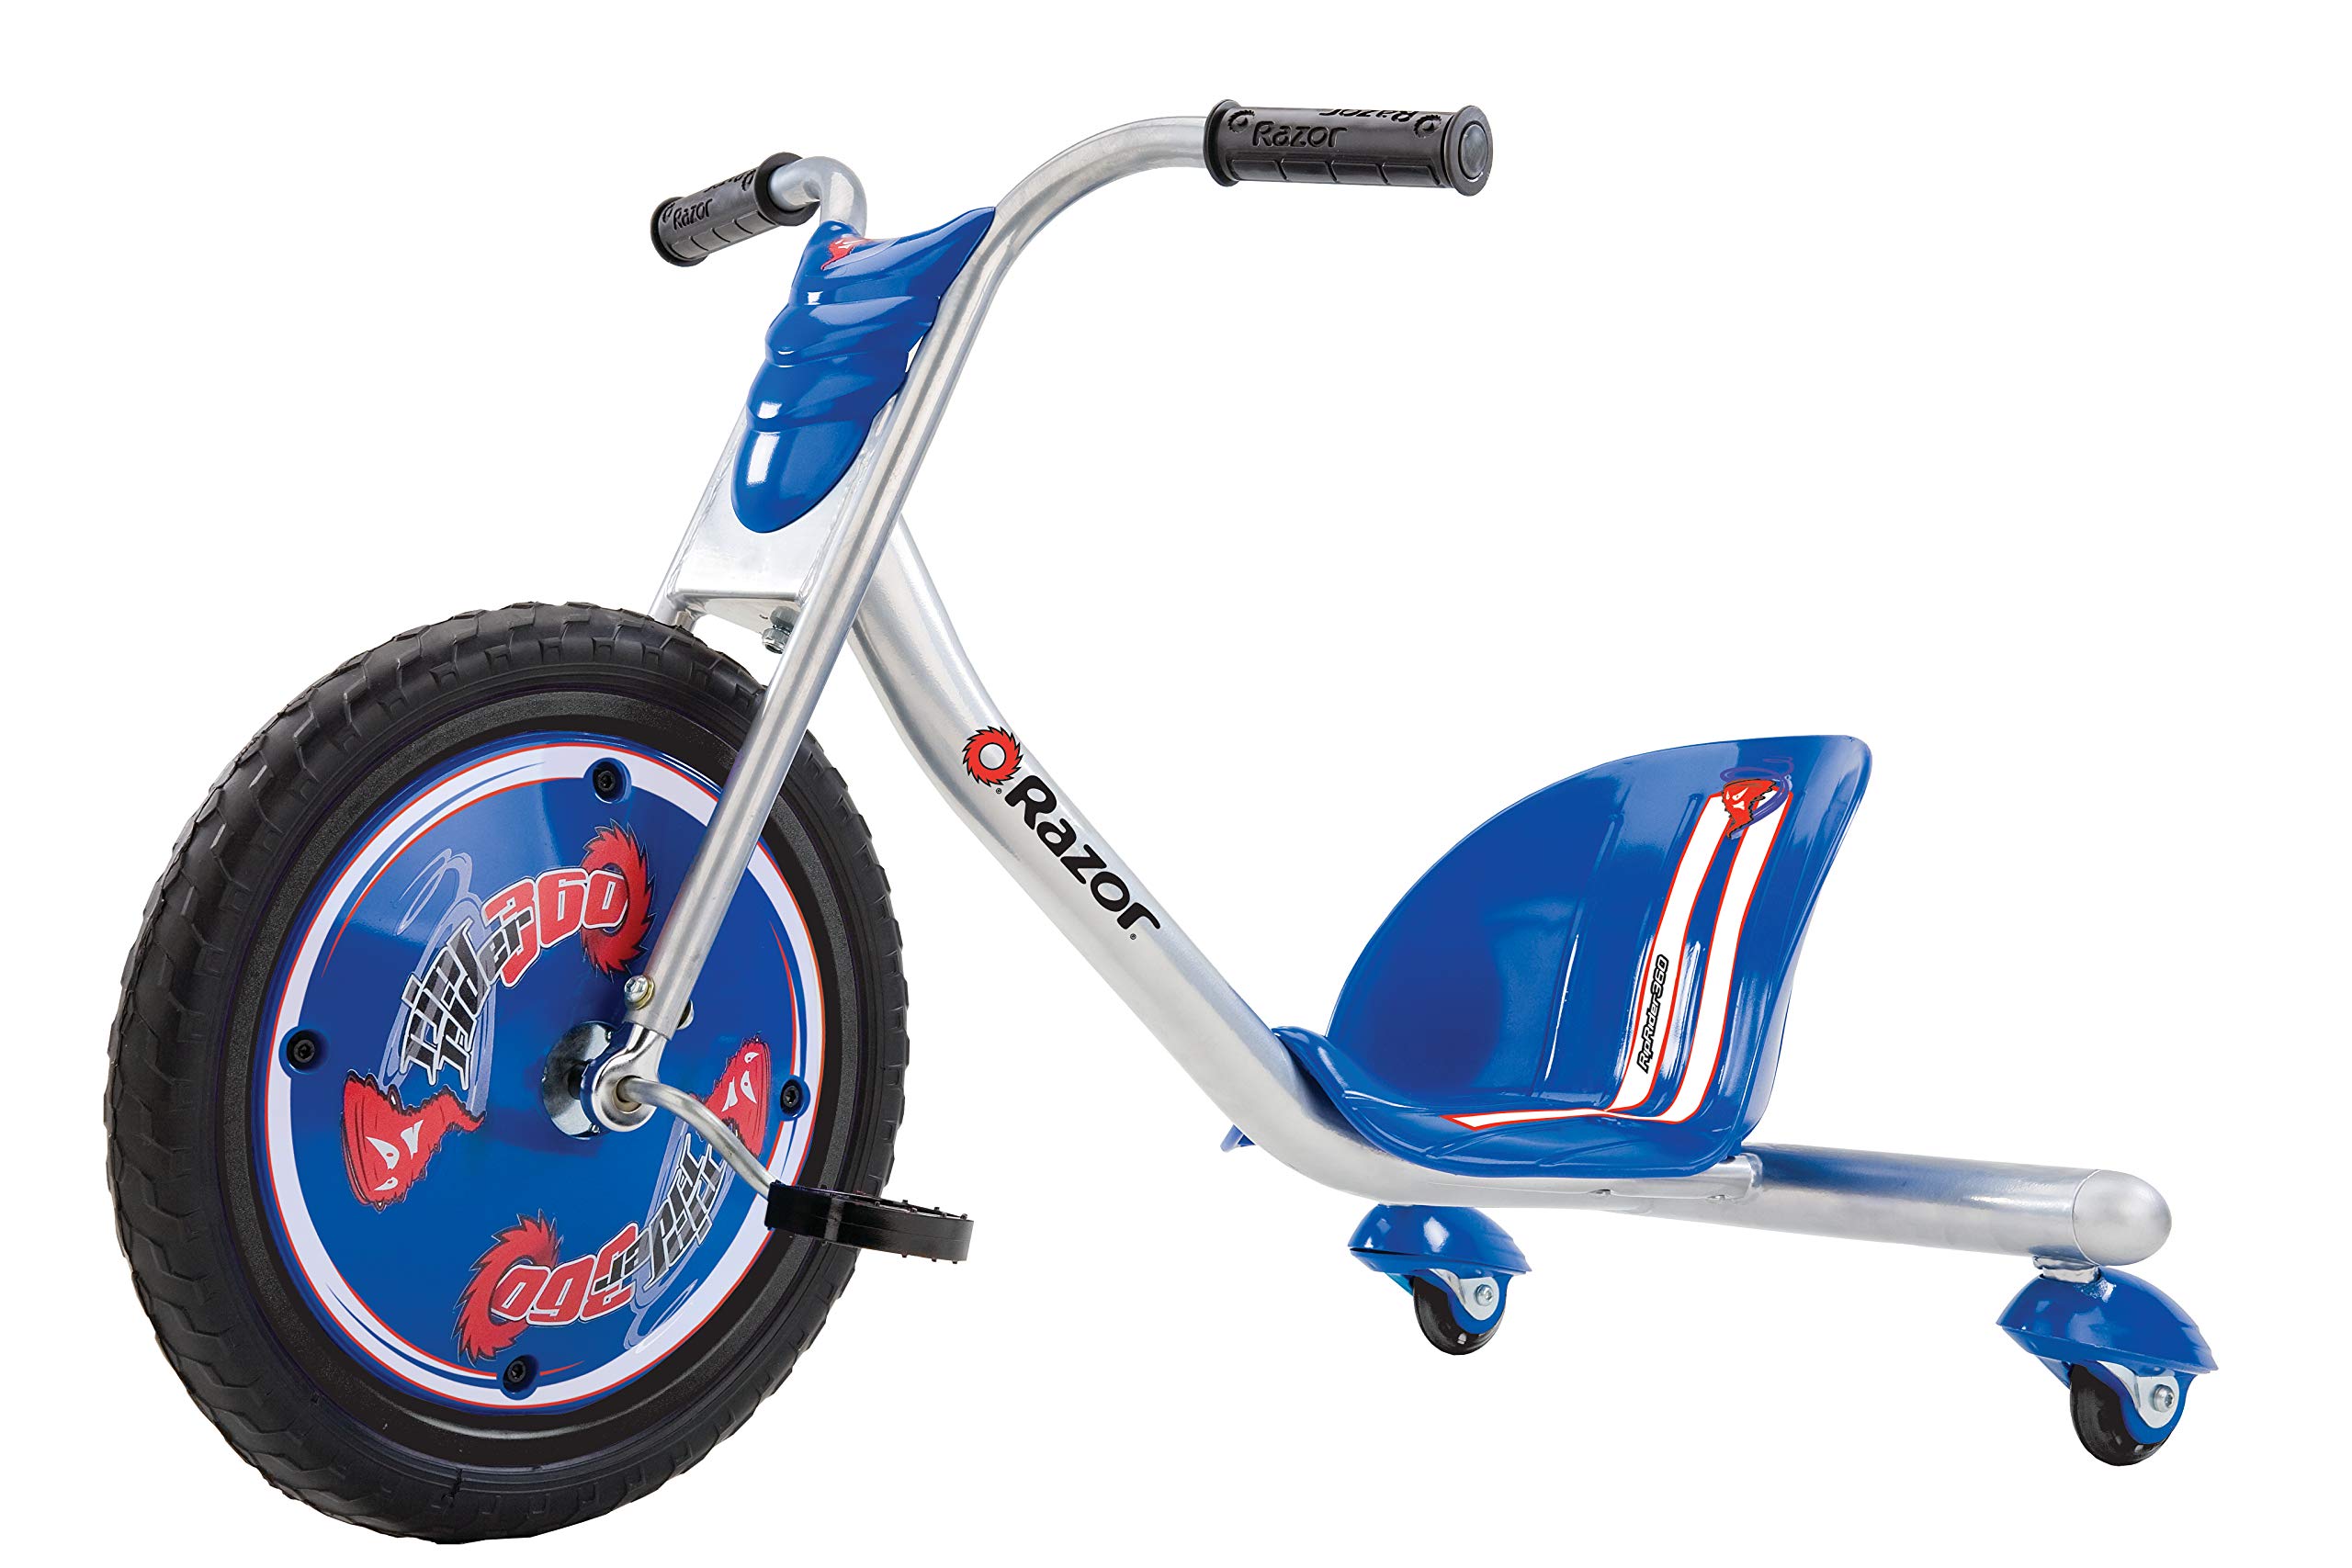  RAZOR دراجة ثلاثية العجلات RipRider 360 للأطفال بعمر 5 سنوات فما فوق - مقود مطاطي خفيف الوزن وإطار فولاذي للراكبين حتى...